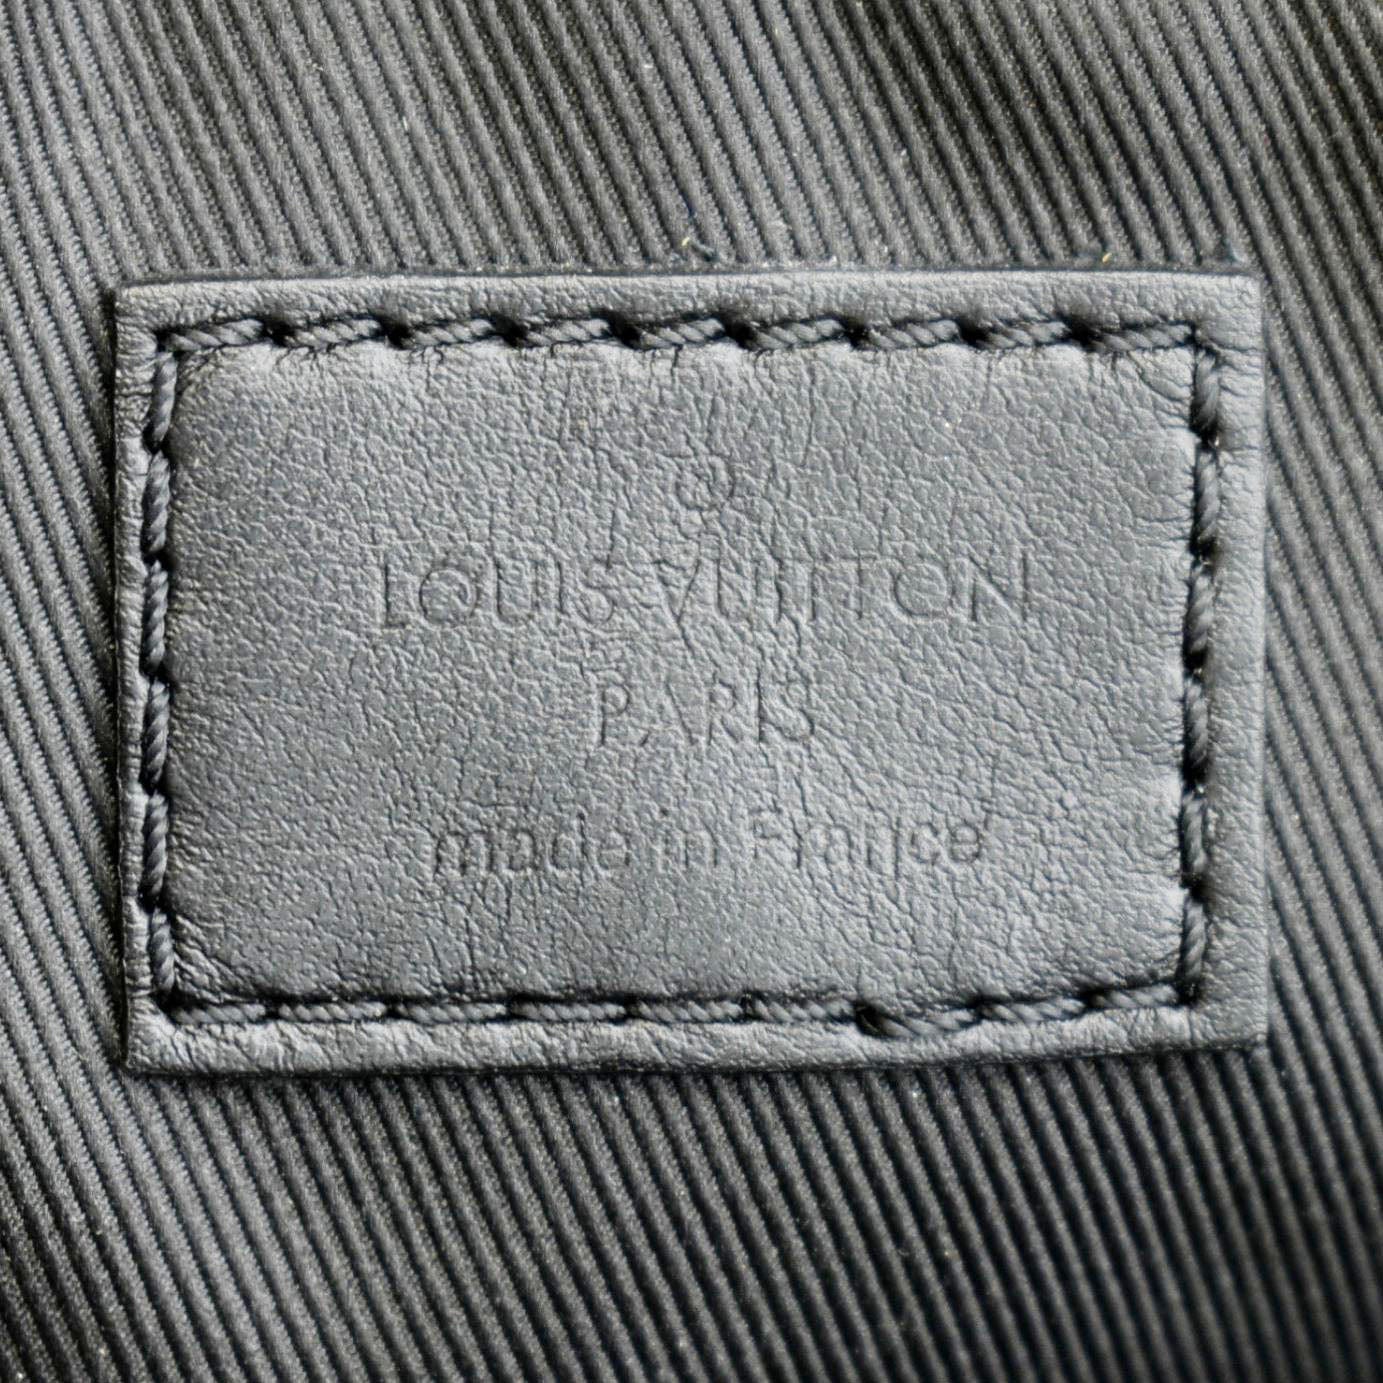 Louis Vuitton label black and gray shoulder bag, includes